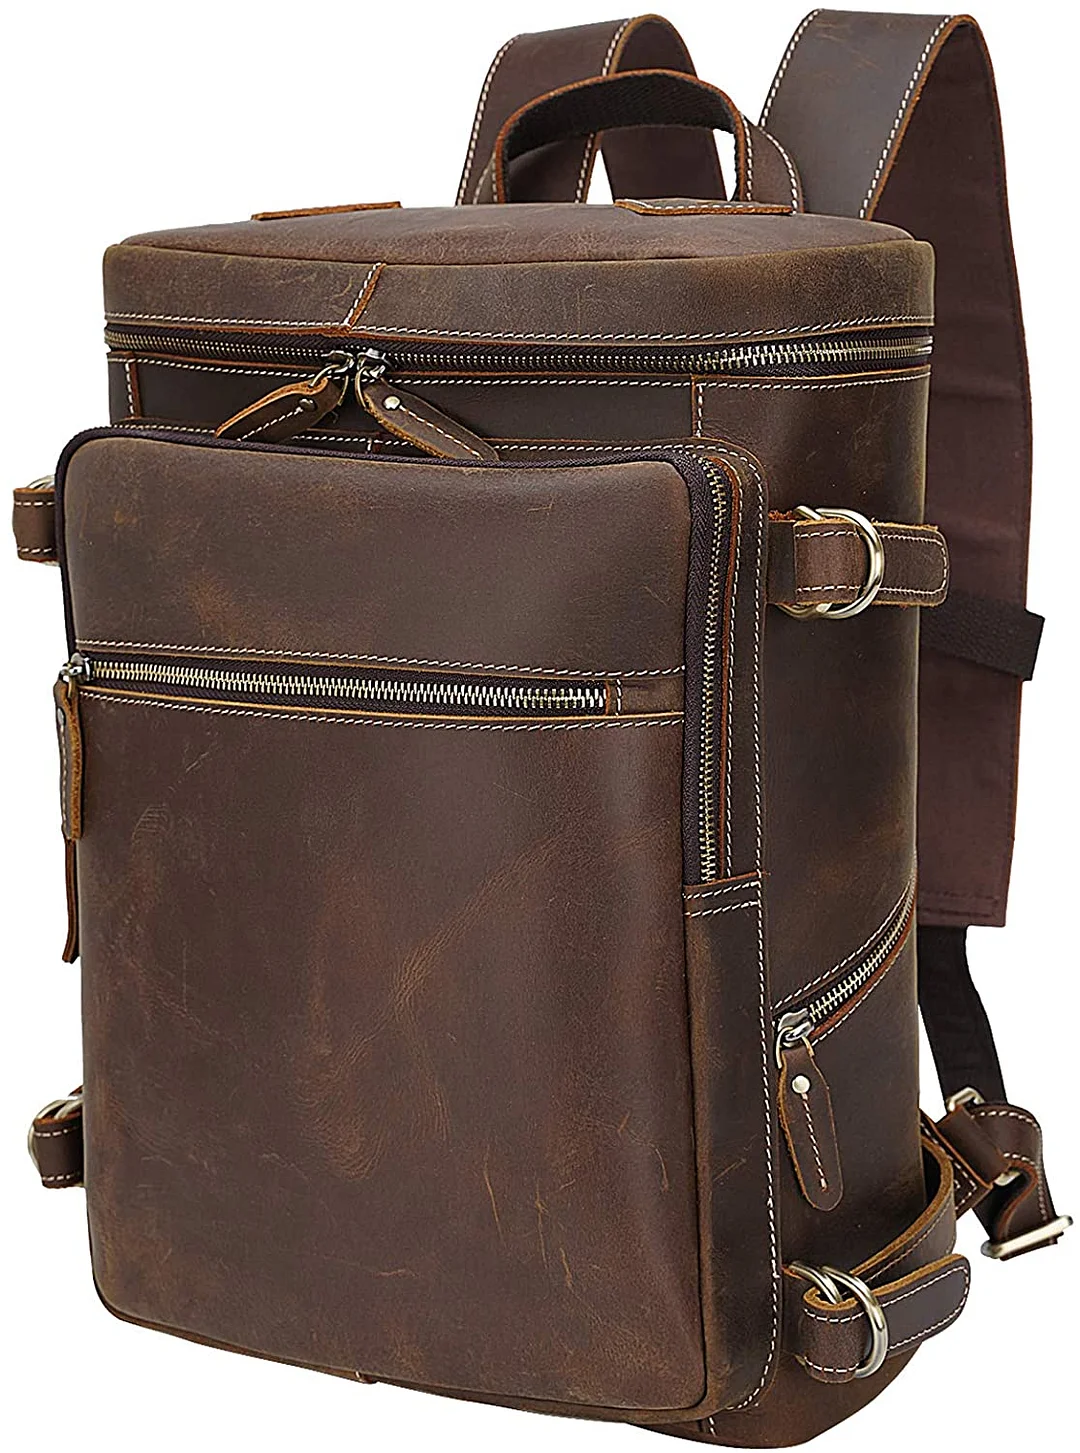 Vintage Genuine Leather Backpack for Men Fits 15.6 Inch Laptop Brown Travel Rucksack College School Book Bag Daypa